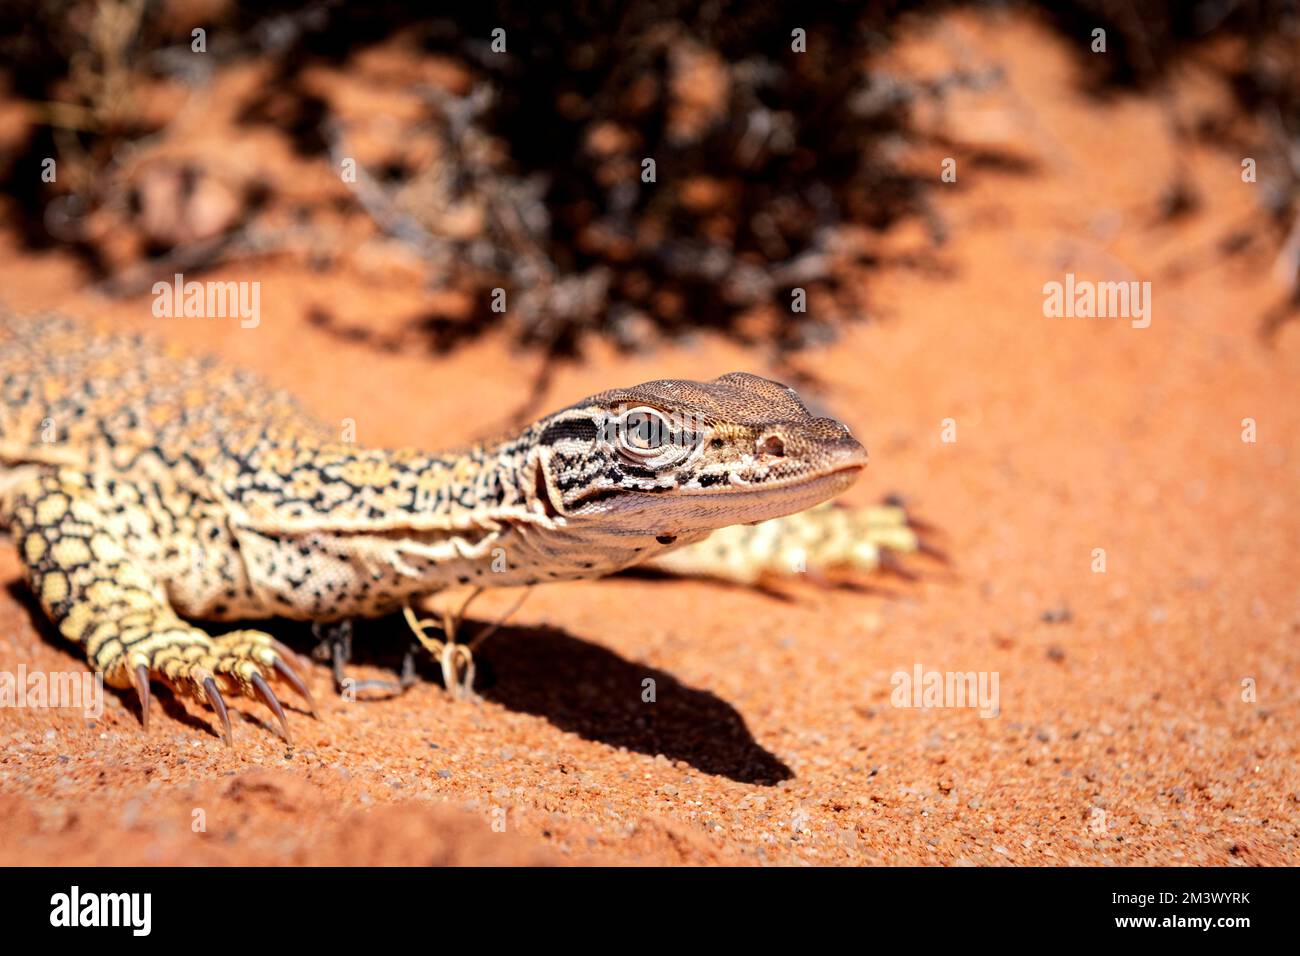 Goulds Goanna in Central Australia's red desert sand. Stock Photo